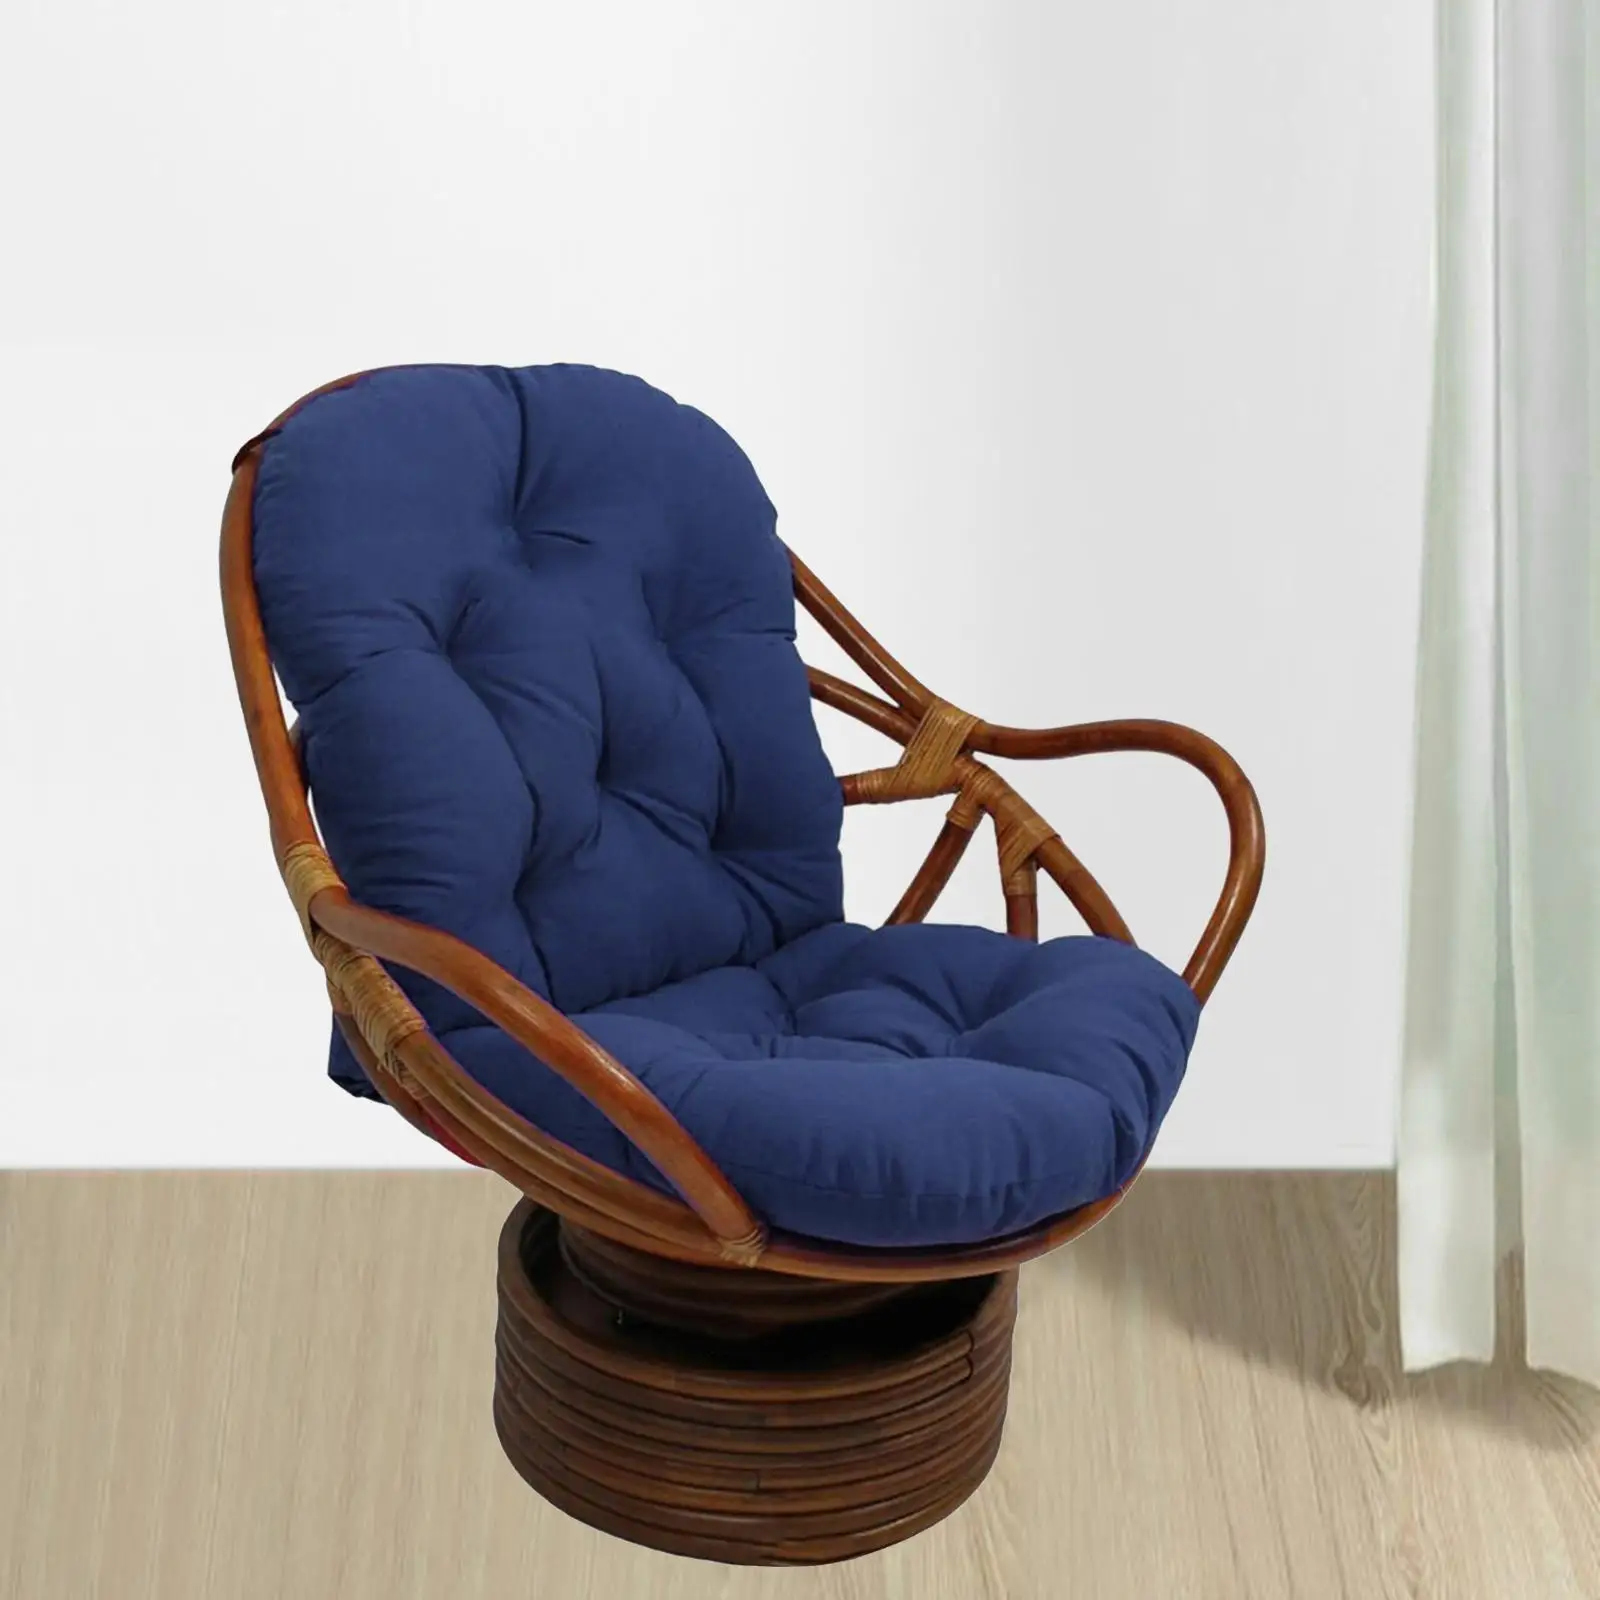 1Pc Swivel Rocker Cushion Outdoor Garden Patio Rattan Wicker Rocking Chair Seat Cushion Pad Indoor High Back Cushion